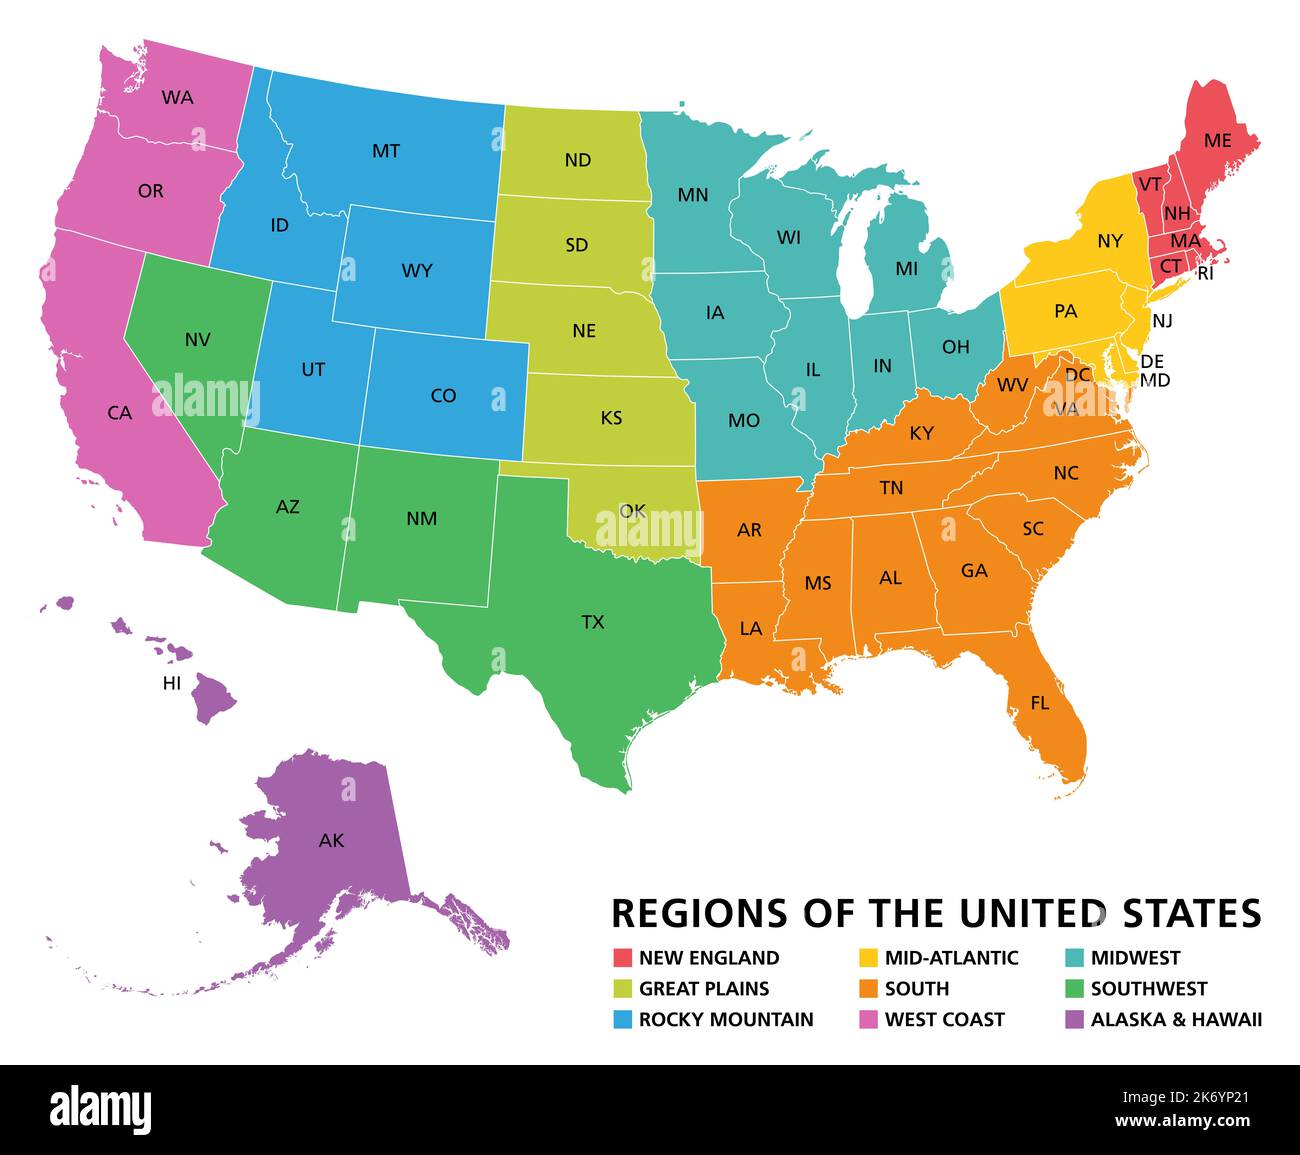 Mappa delle regioni degli Stati Uniti. New England, Great Plains, Rocky Mountain, Mid Atlantic, South, West Coast, Midwest, Southwest, Alaska e Hawaii. Foto Stock